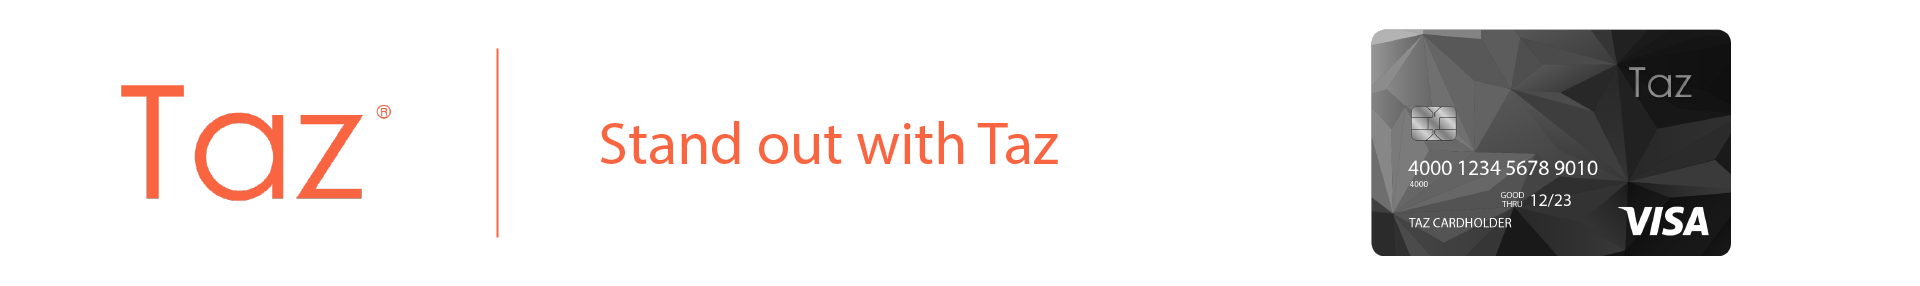 Taz Credit Card Banner